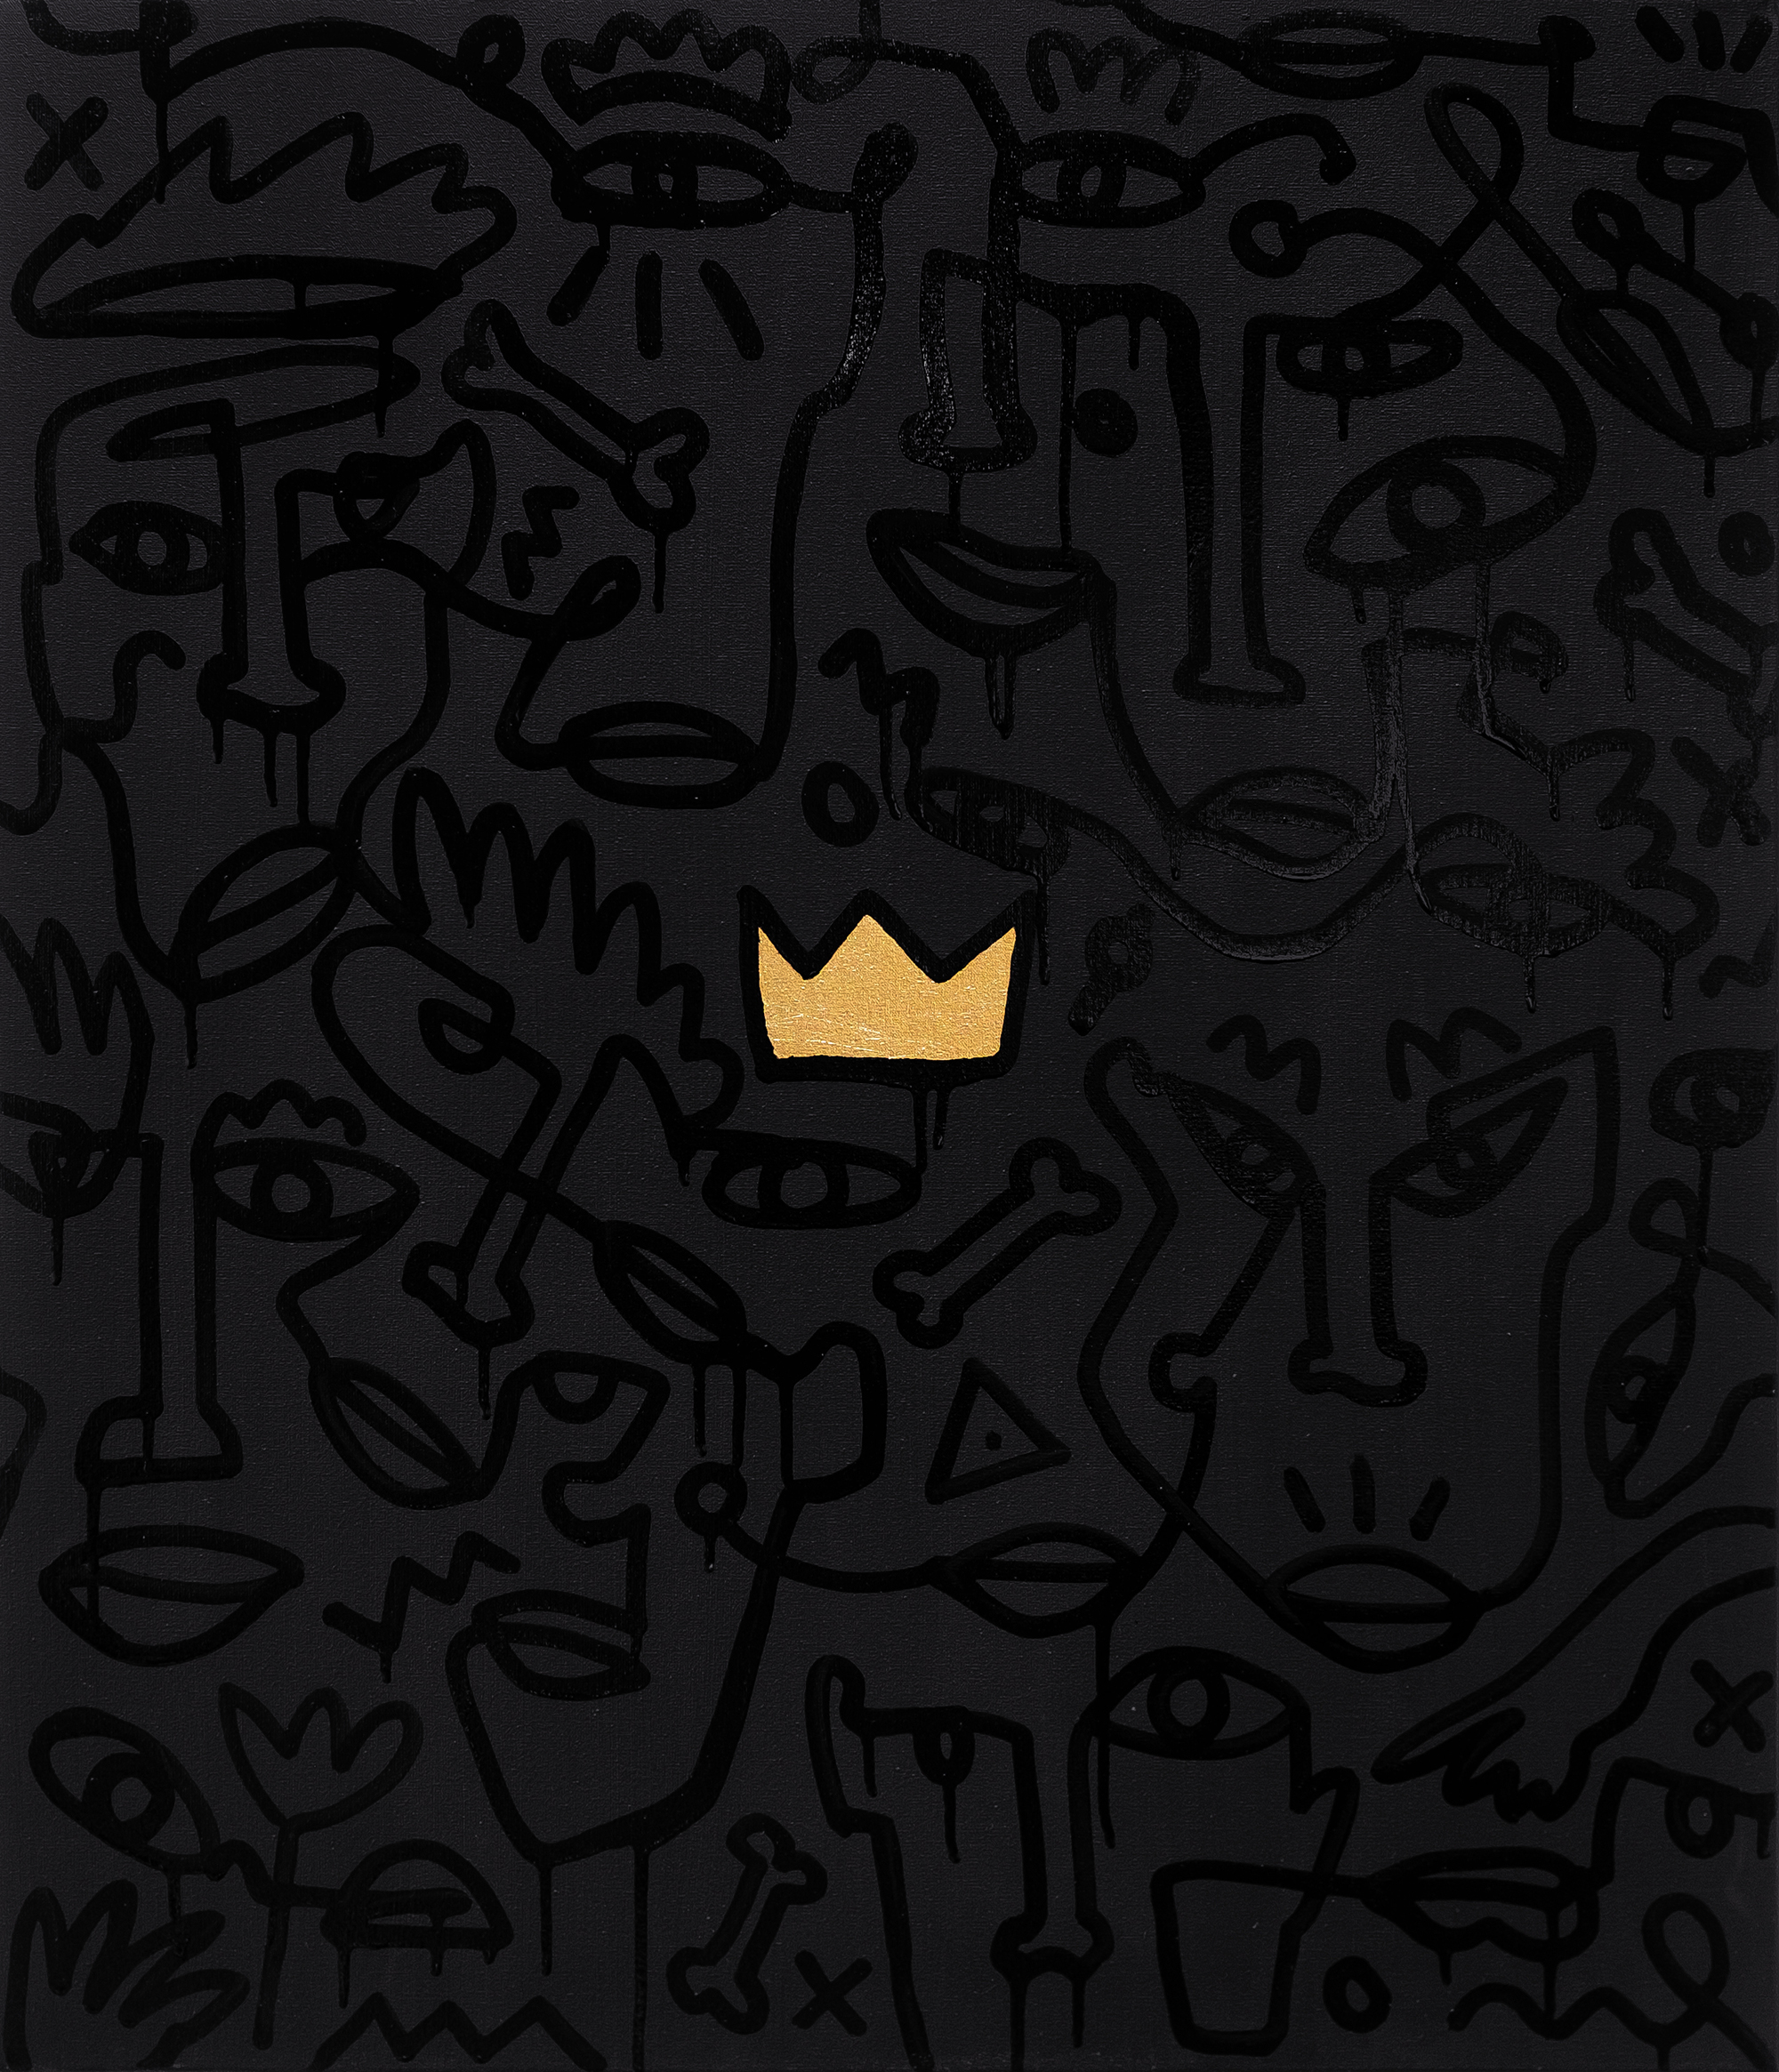 Black Velvet Future - contemporary Ukrainian art - monoline faces on a black with crown in the center - black on black picture